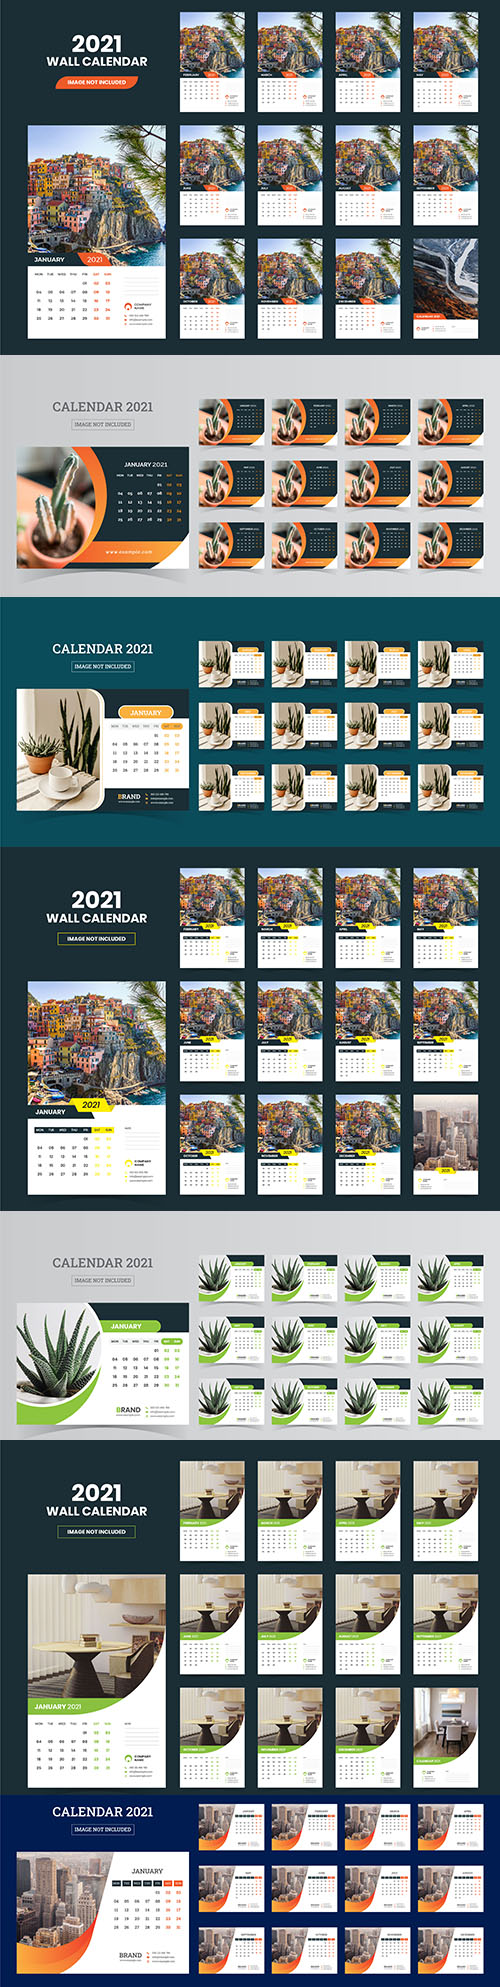 Desktop calendar for 2021 with decorative photos
